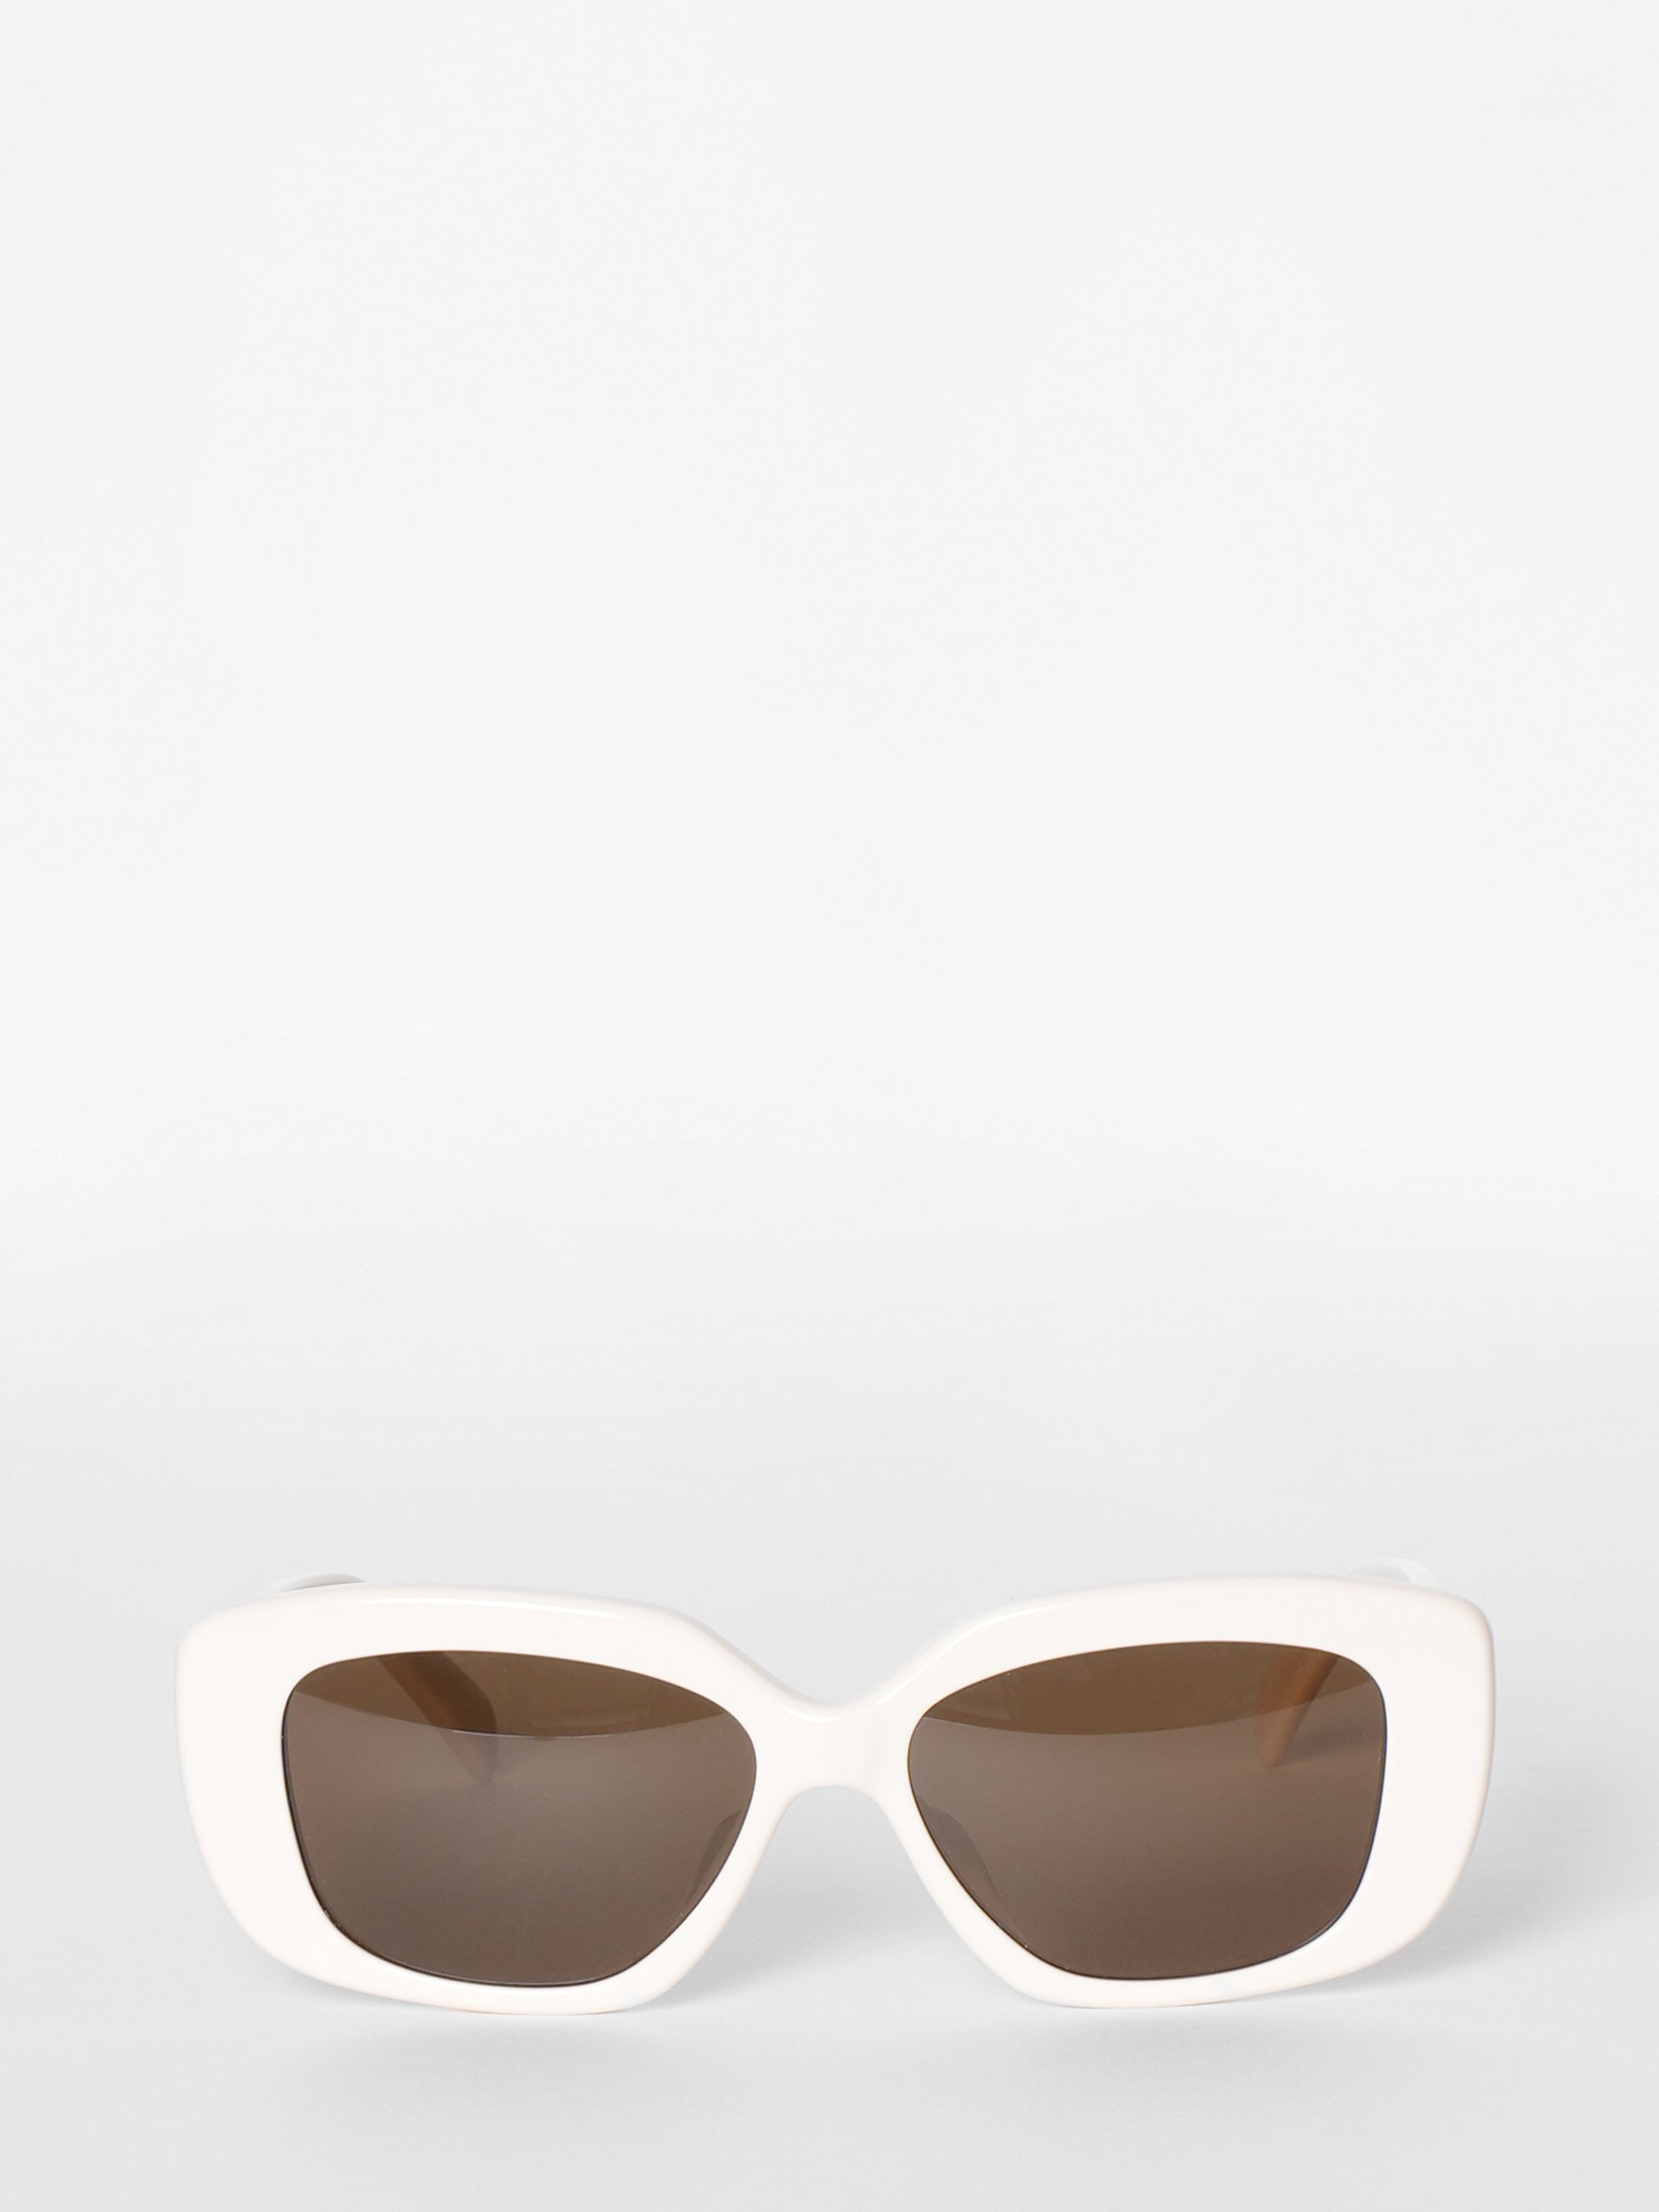 Louis Vuitton Sunglasses  The Brandster India - Retail